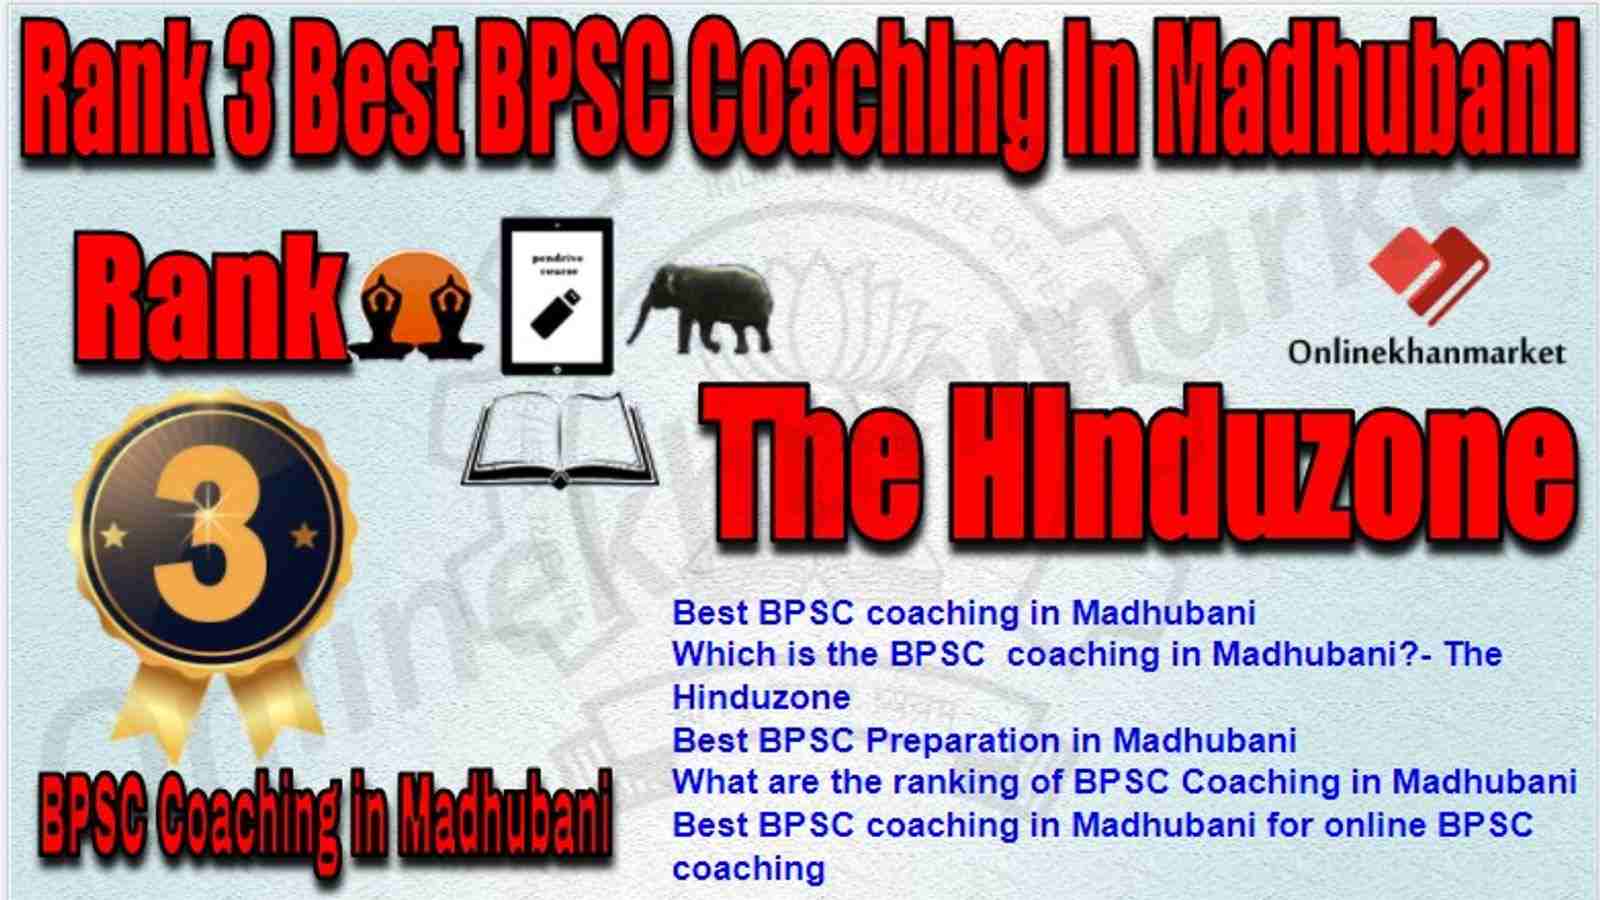 Rank 3 Best BPSC Coaching in madhubani